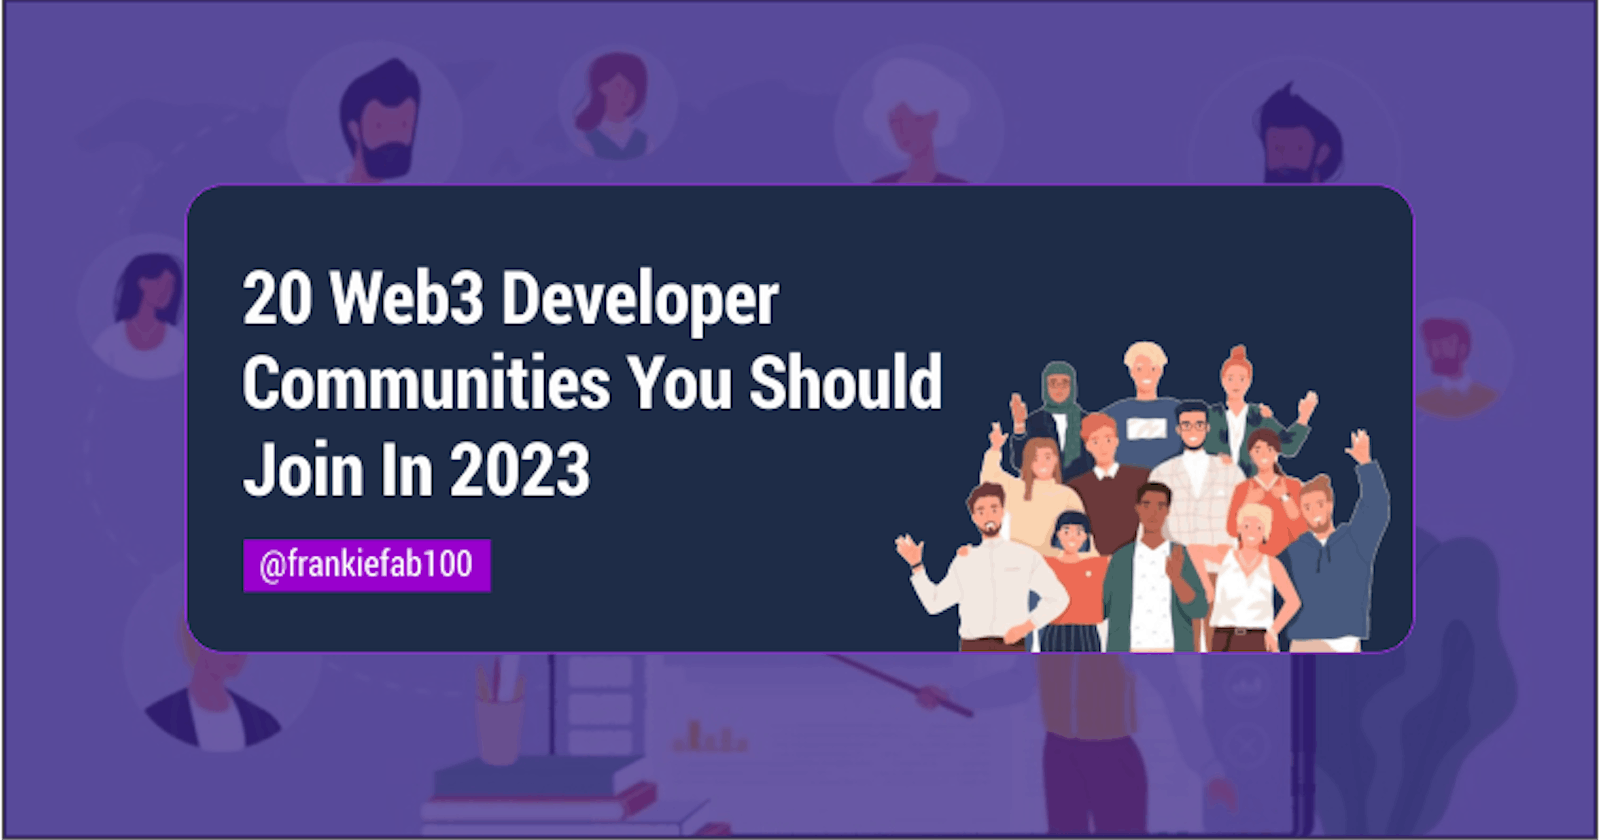 20 Web3 Developer Communities You Should Join In 2023